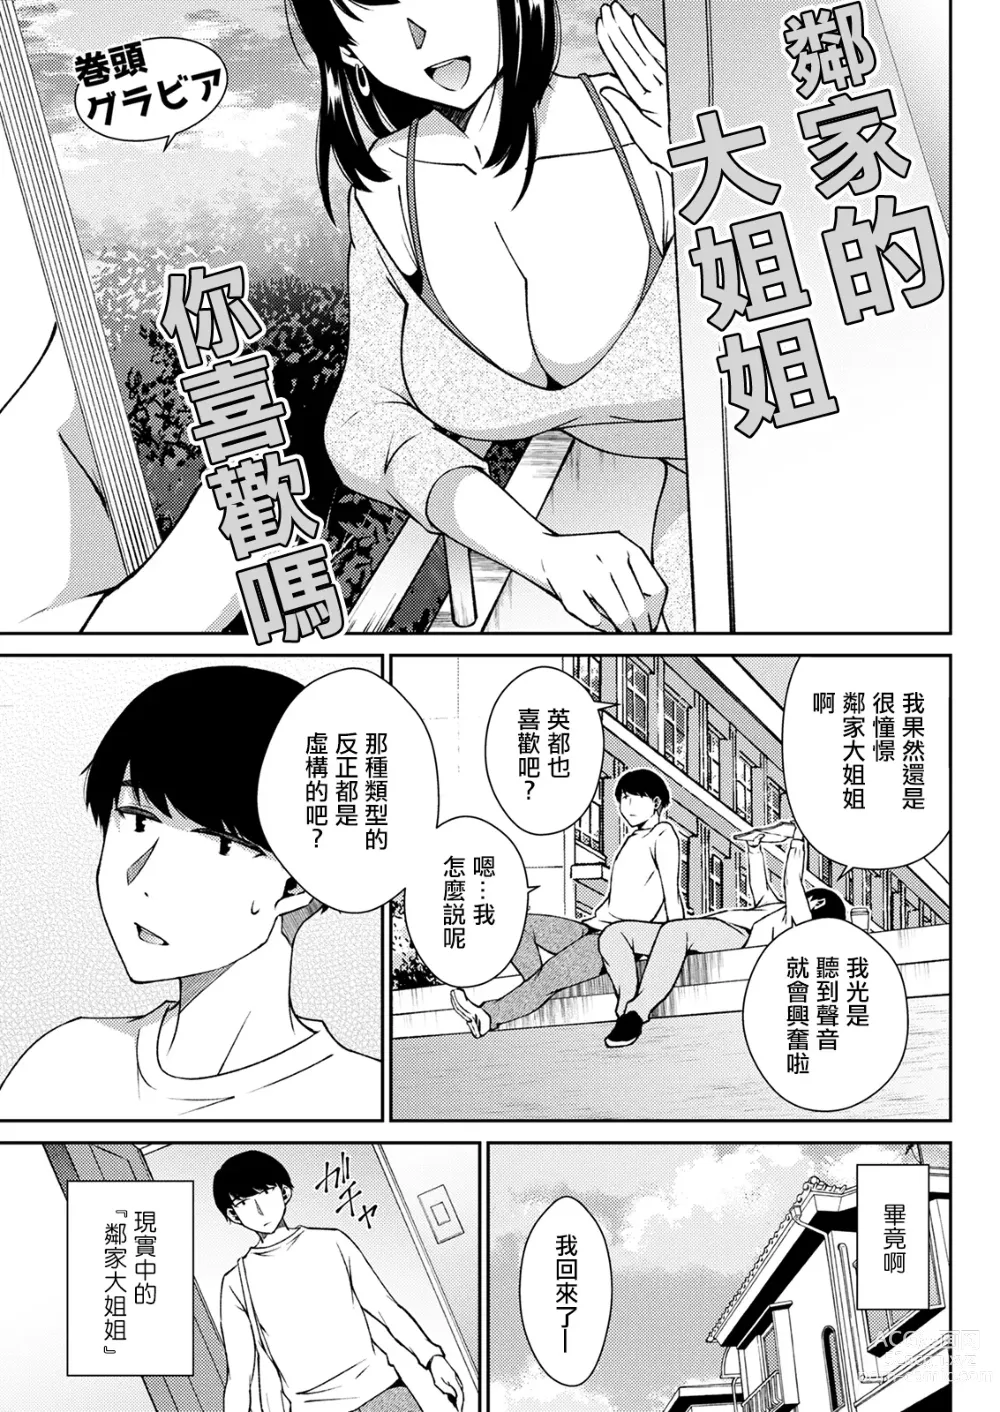 Page 1 of manga Koi no Wazurai